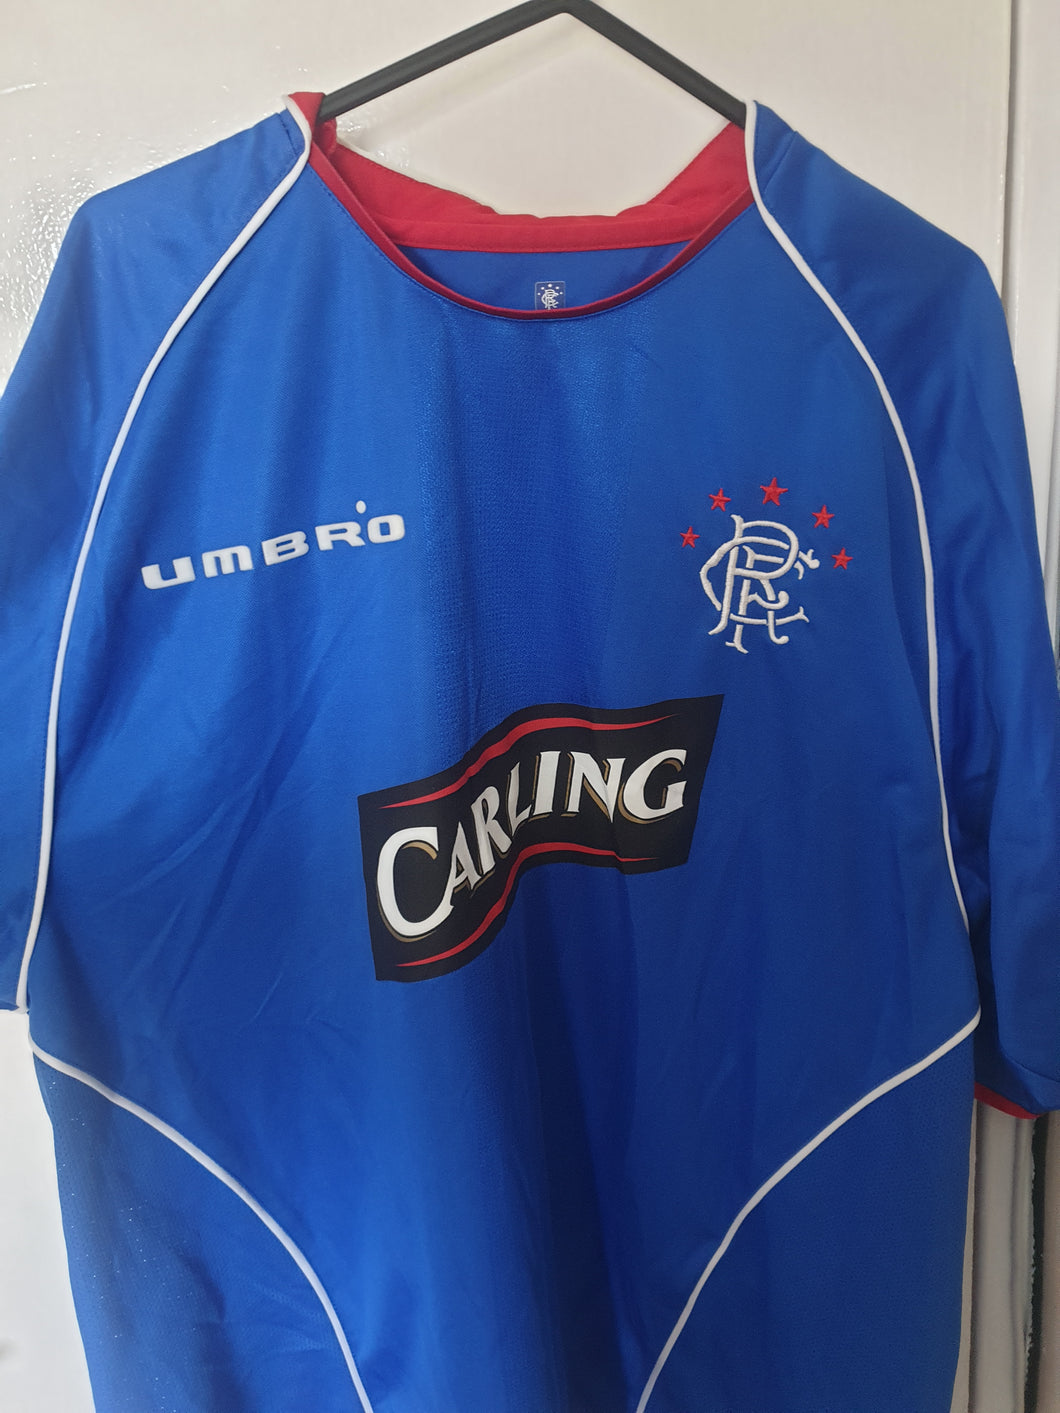 Glasgow Rangers 2005-2006 Home Shirt (Size Large)